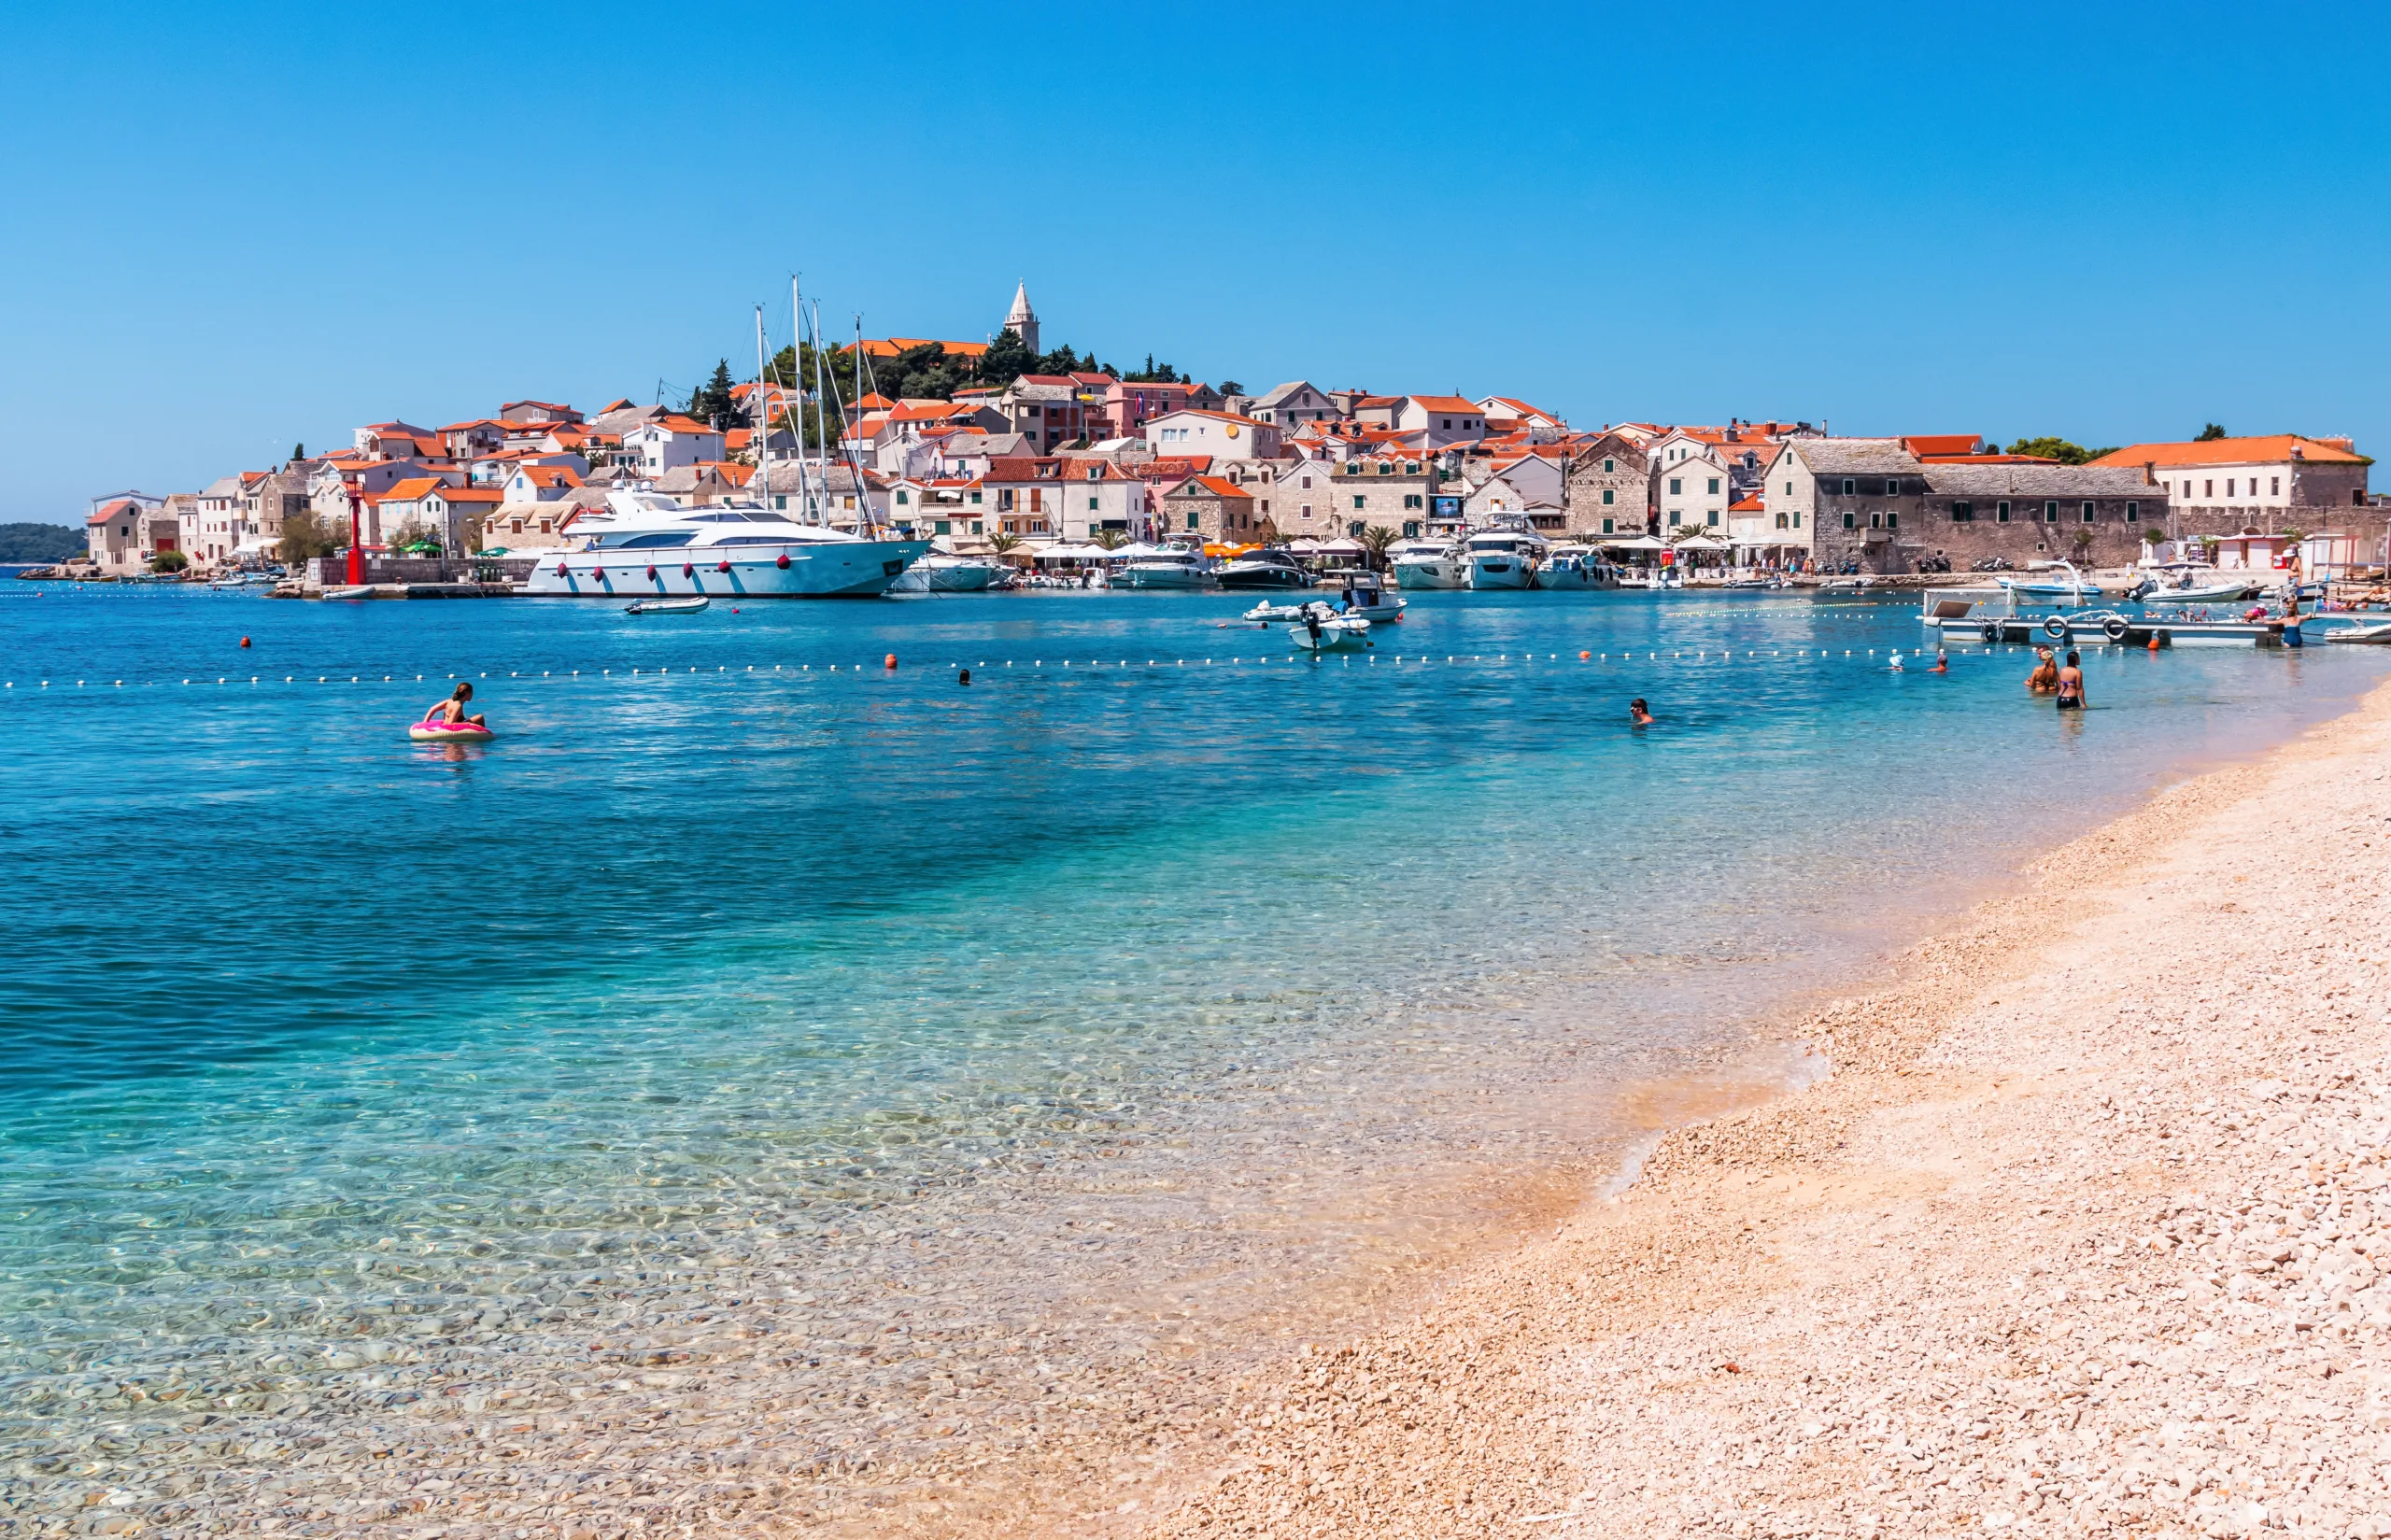 One of Croatia’s famous pebble beaches